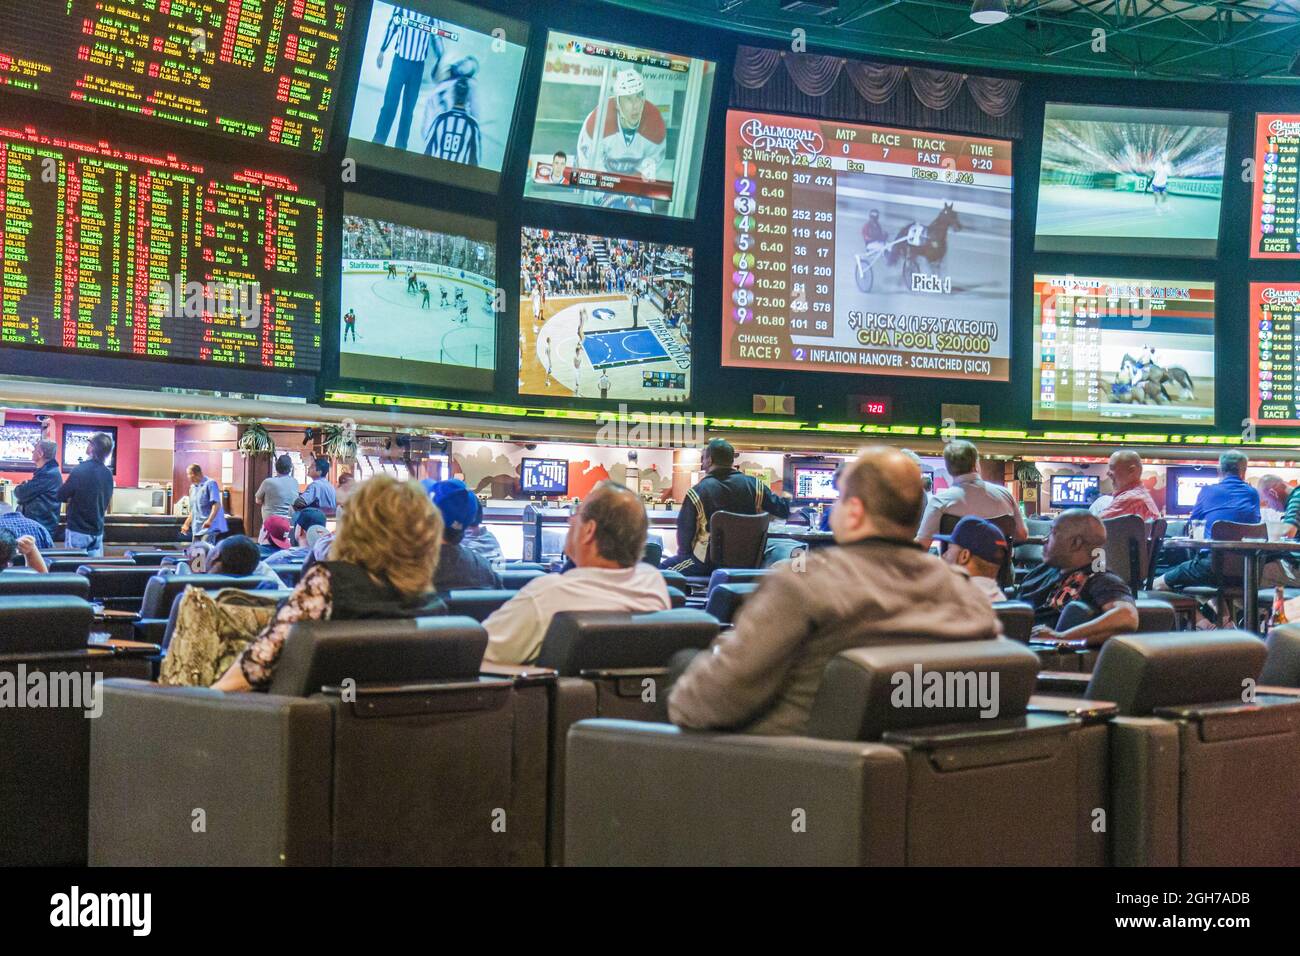 Las Vegas Nevada,Westgate Las Vegas Resort & Casino,sportsbook,betting odds gamblers gambling sporting events monitors men Stock Photo